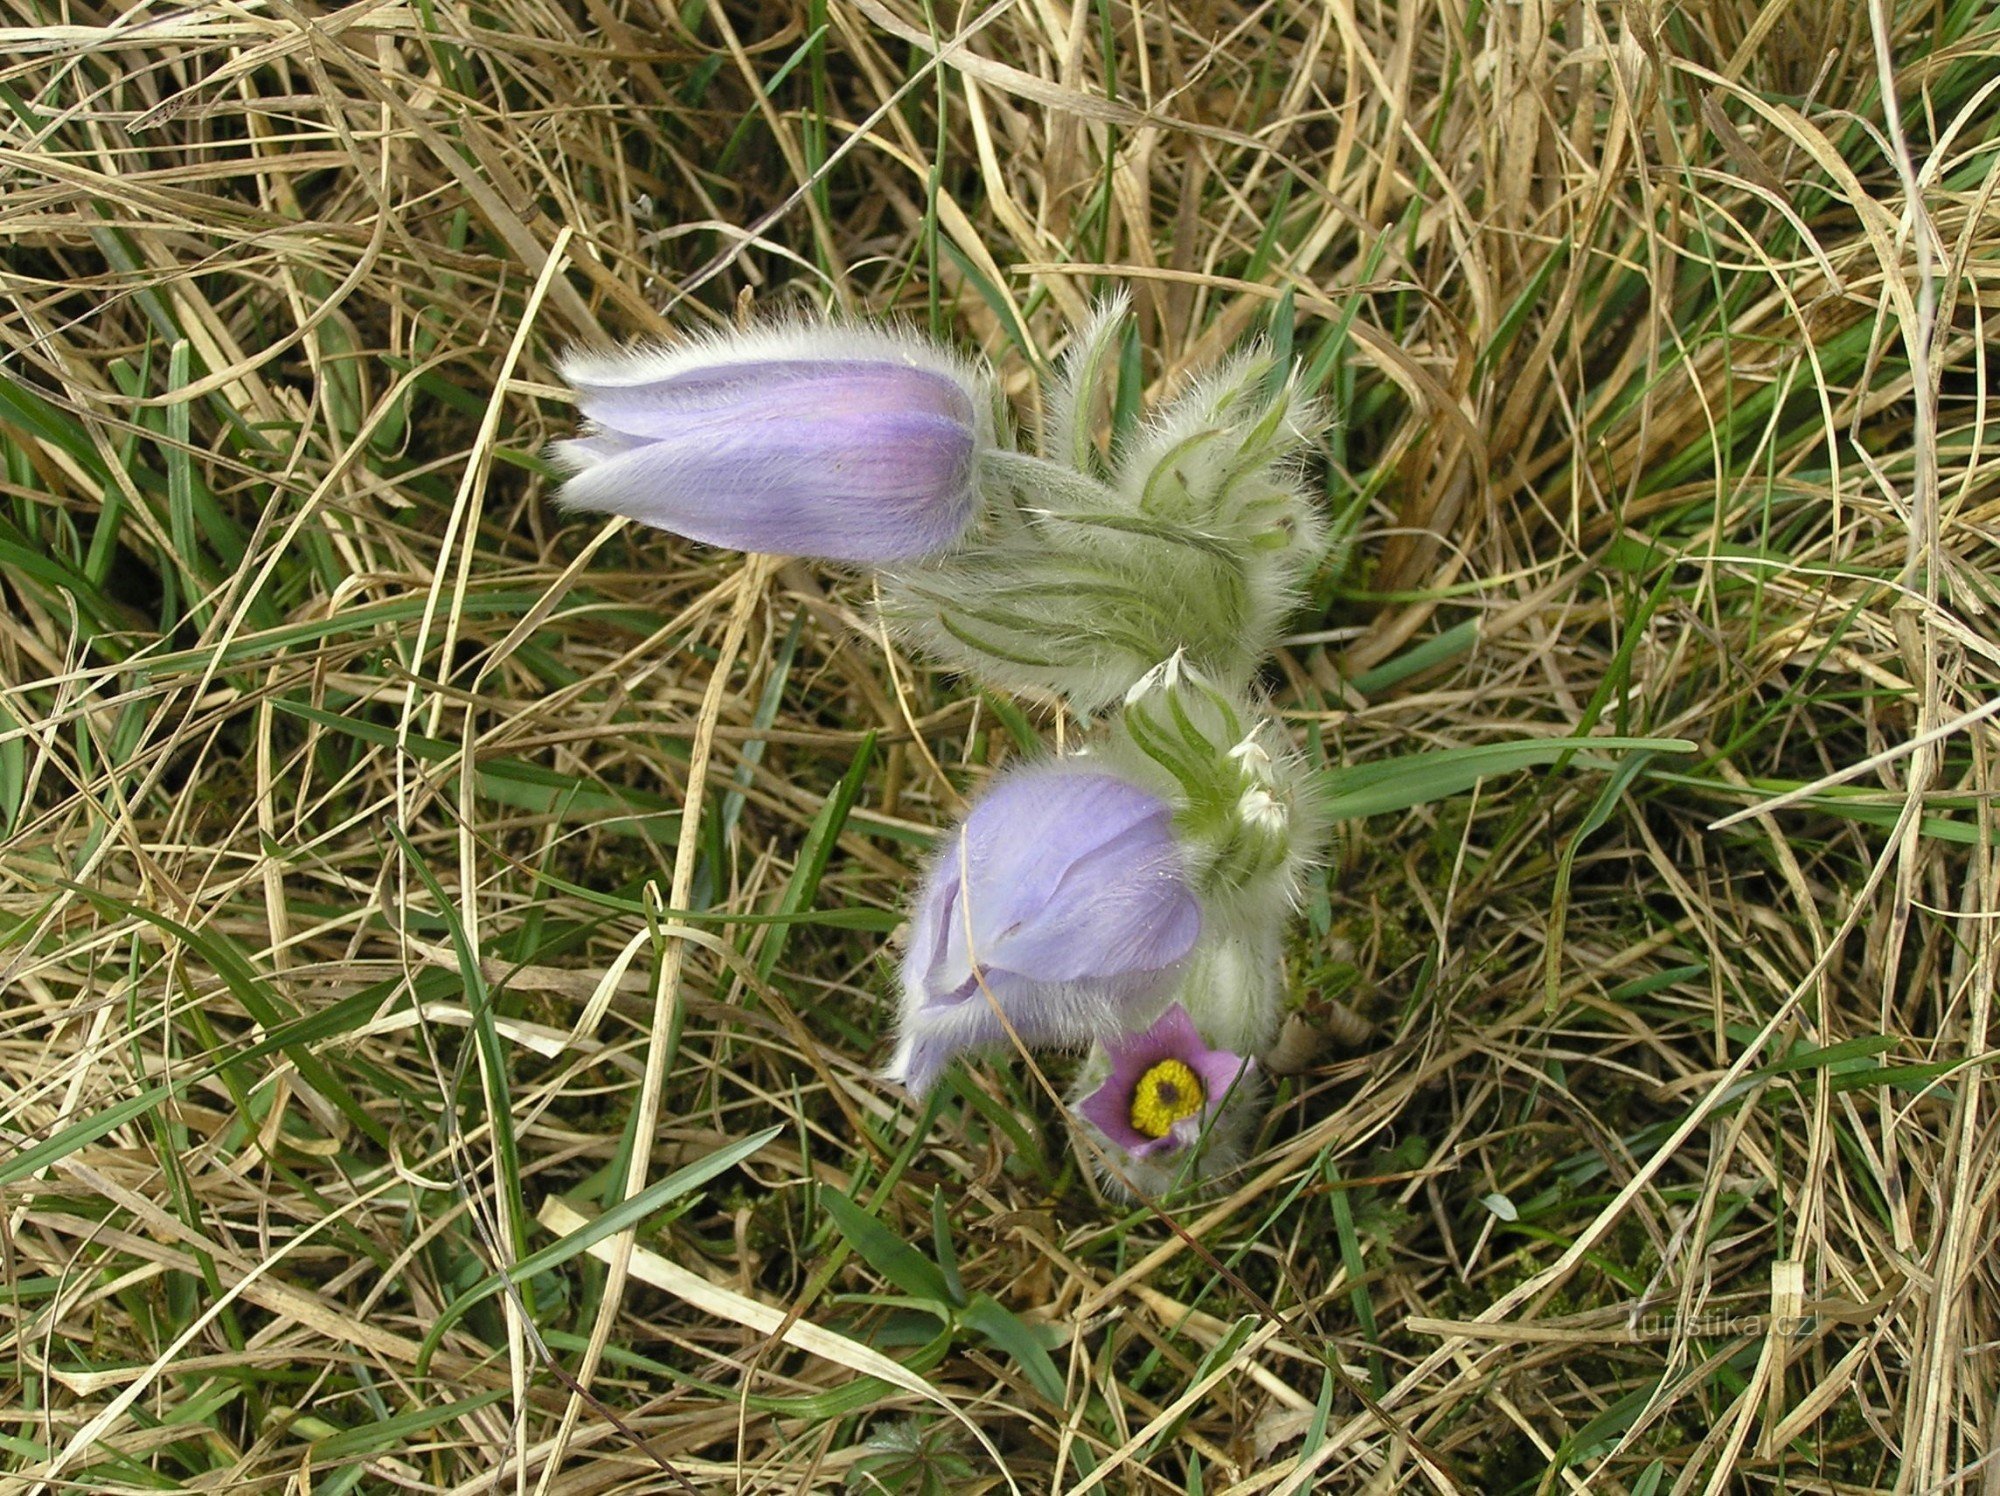 In witte klei - Pulsatilla grandis (Pulsatilla grandis) (april 2011)